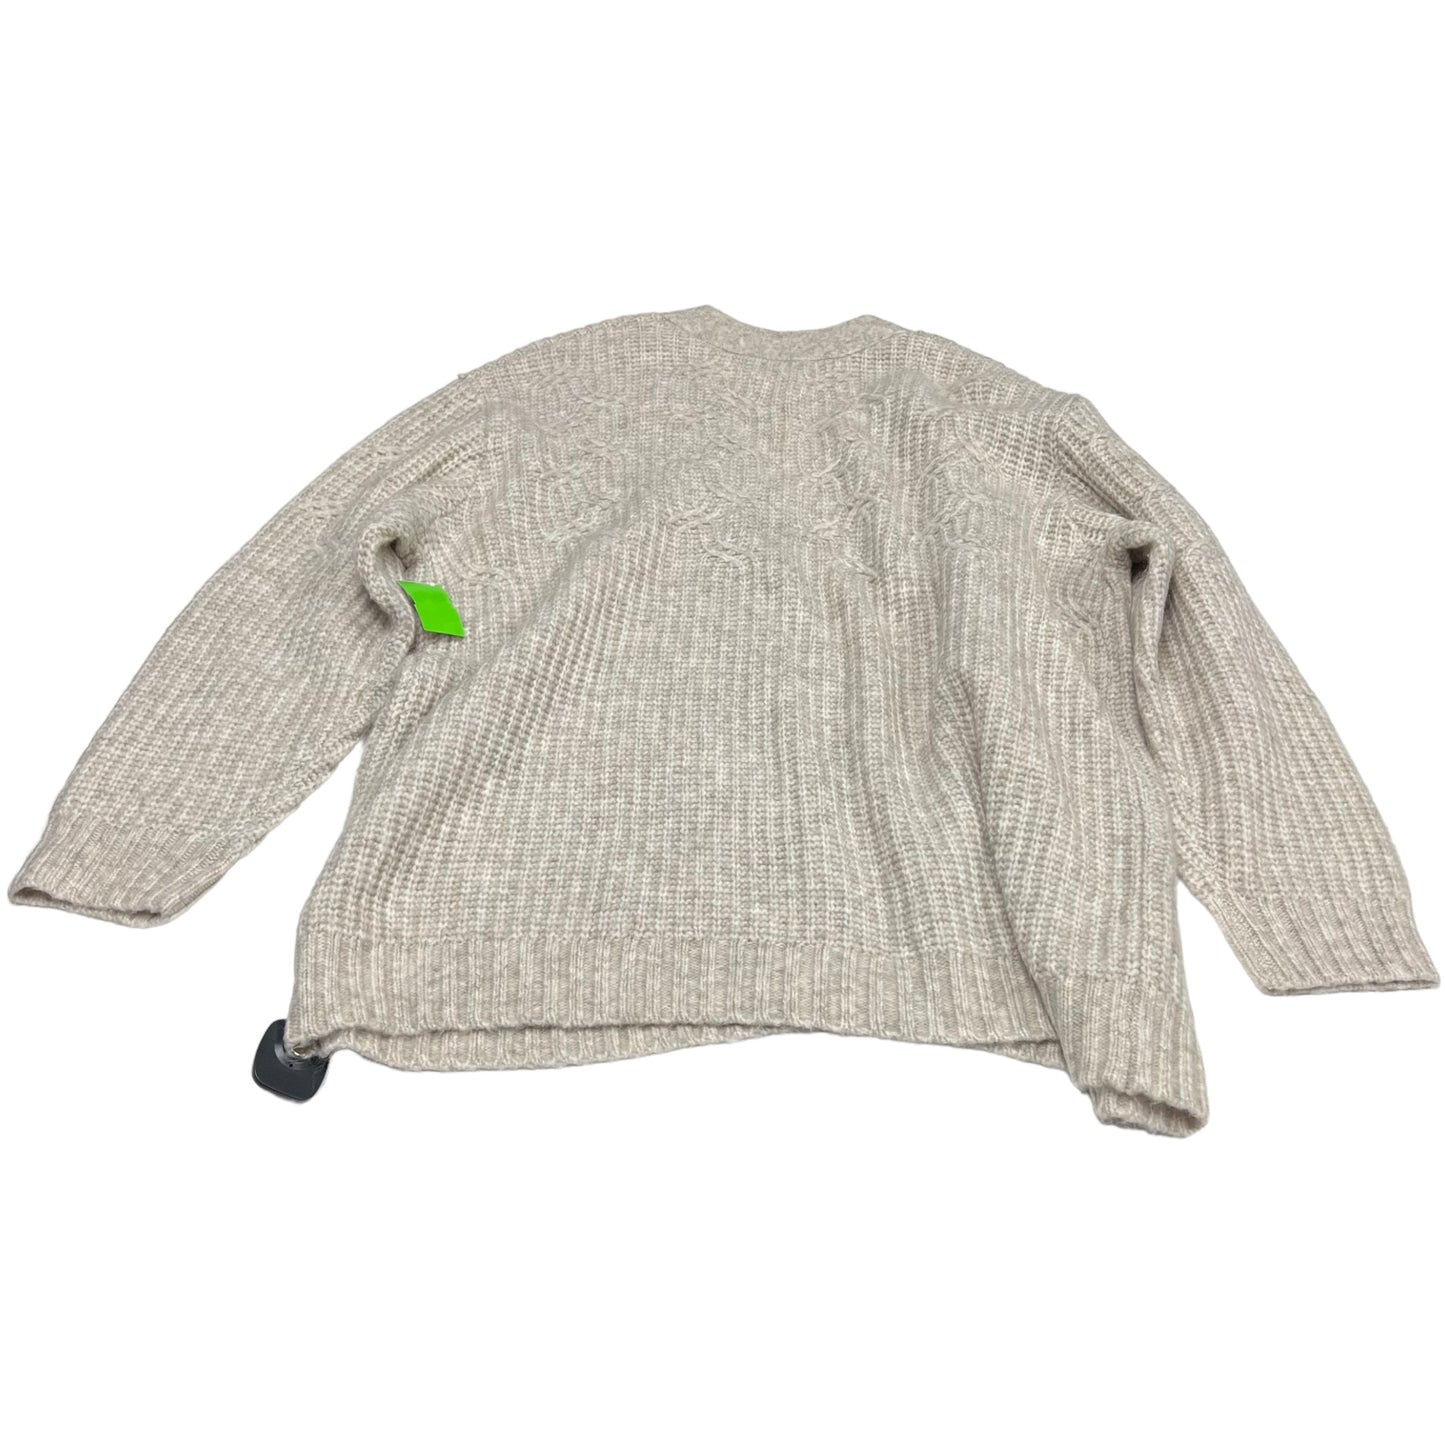 Sweater Cardigan By Ava & Viv  Size: 2x